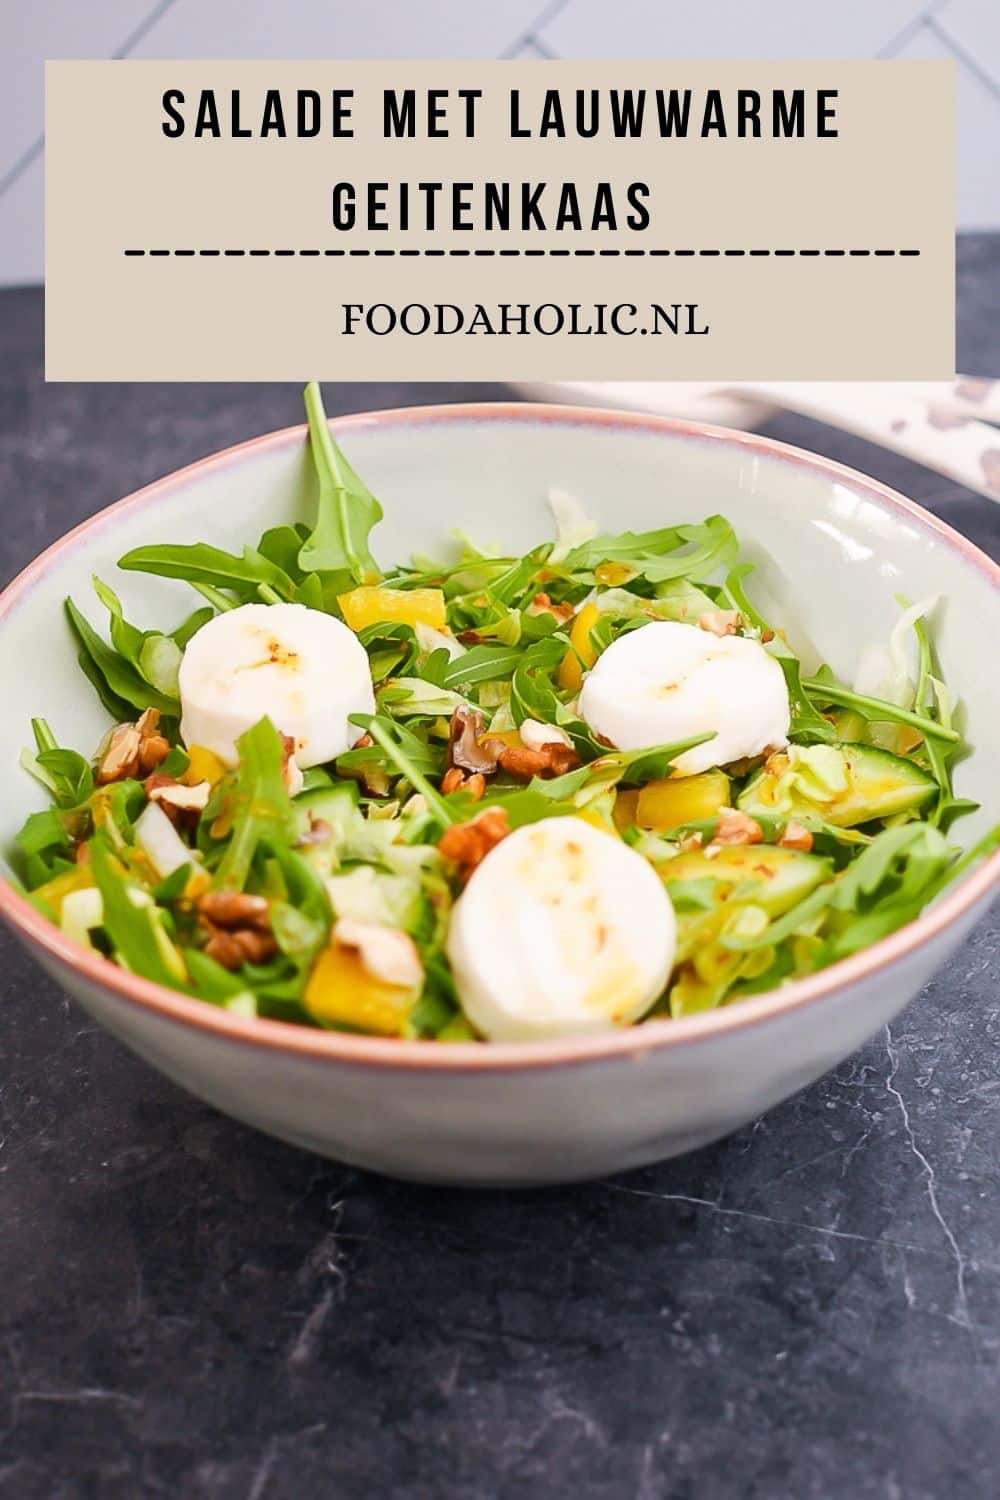 Salade met lauwwarme geitenkaas, walnoten en honing-mosterddressing - Pinterest | Foodaholic.nl